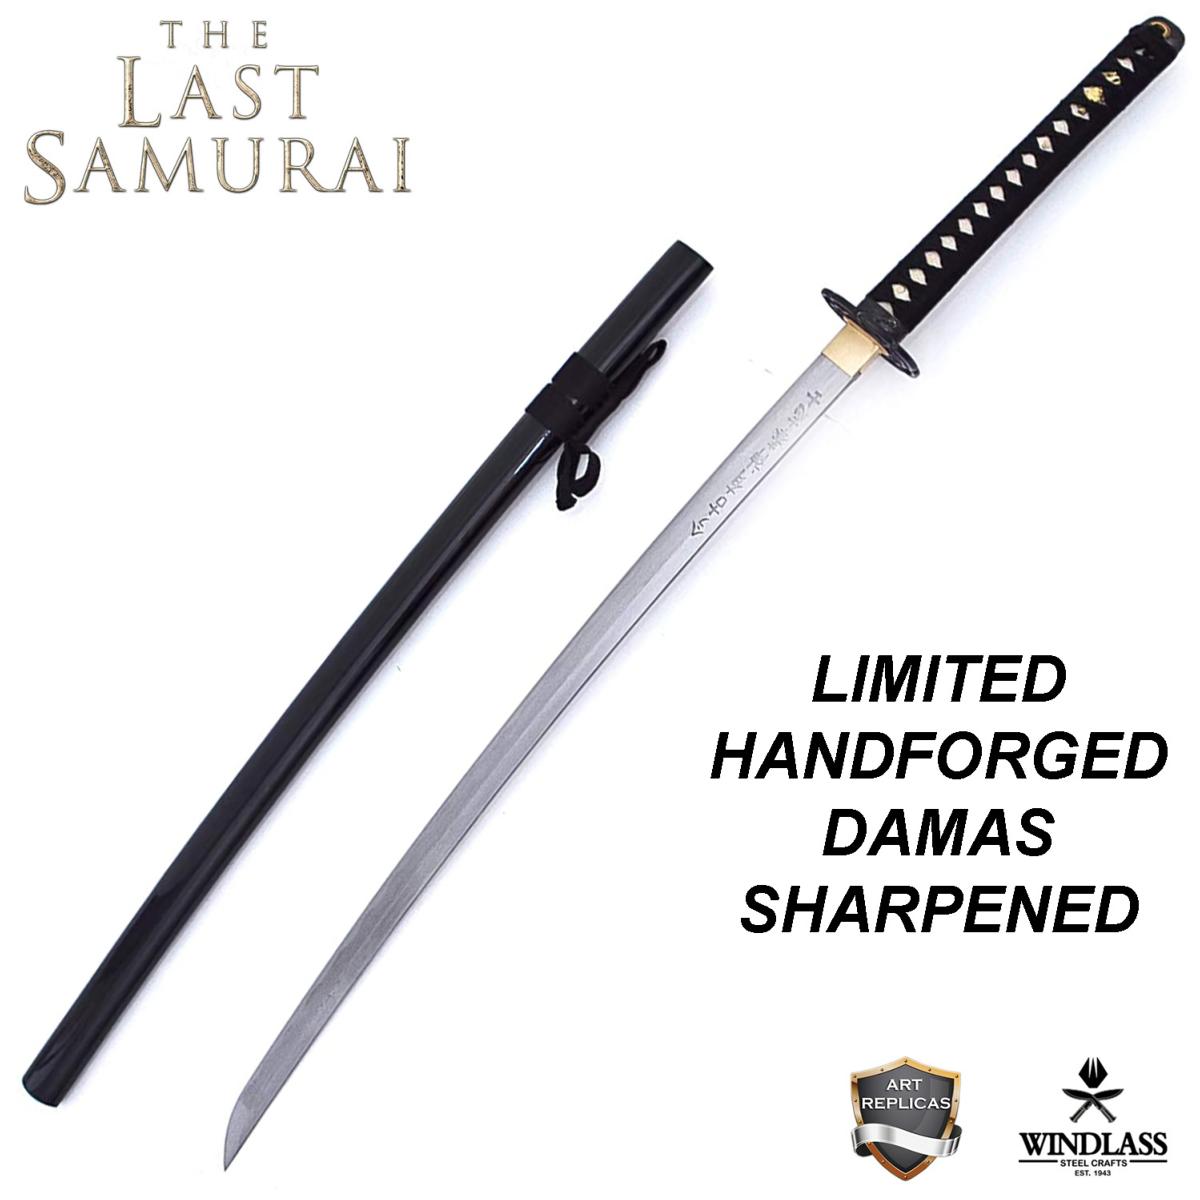 Le Dernier Samourai The Last Samurai Sabre Nathan Algren Lame Damas Forge Main Limited